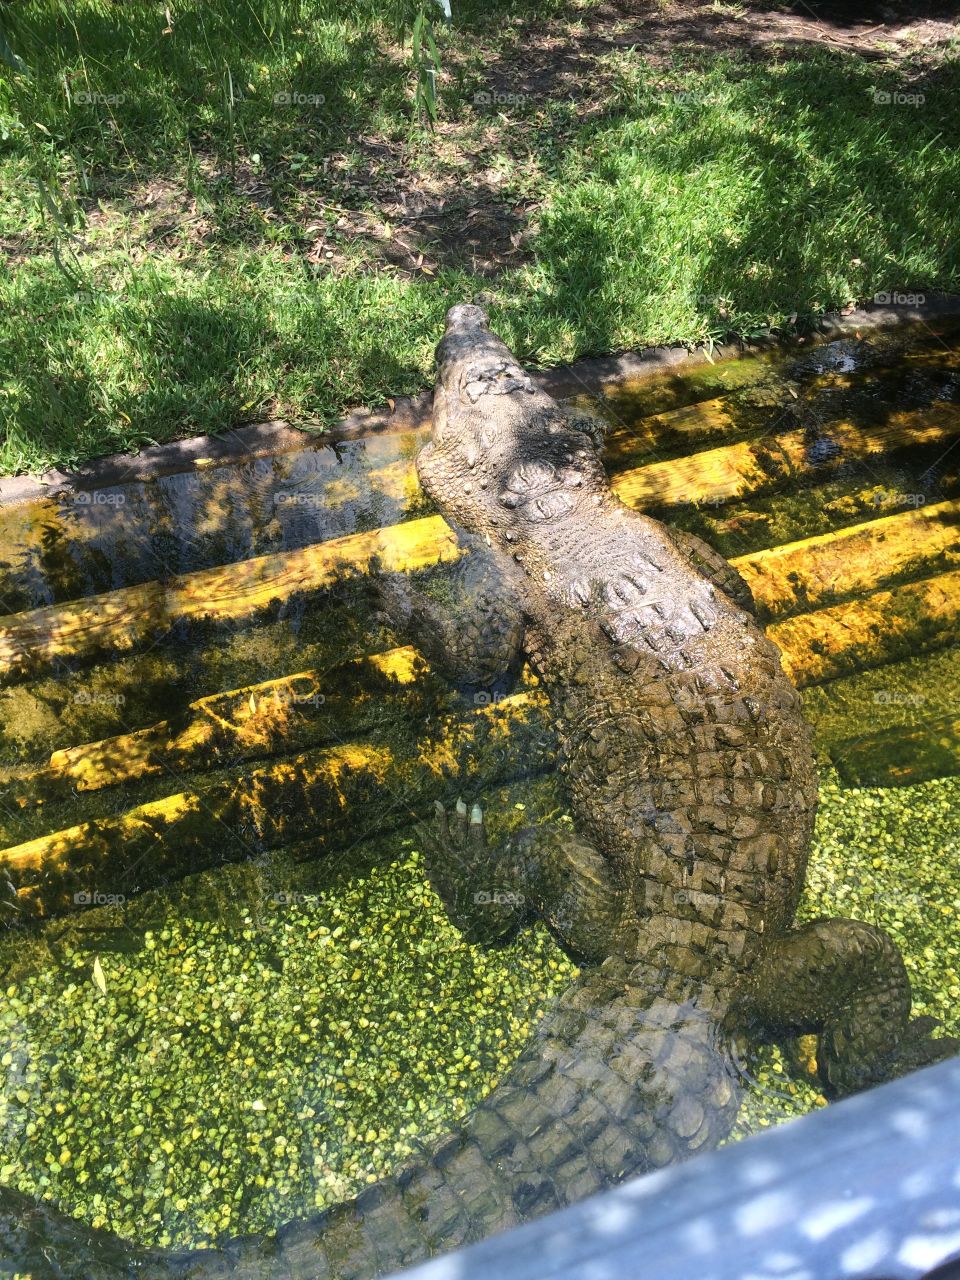 Alligator Basking